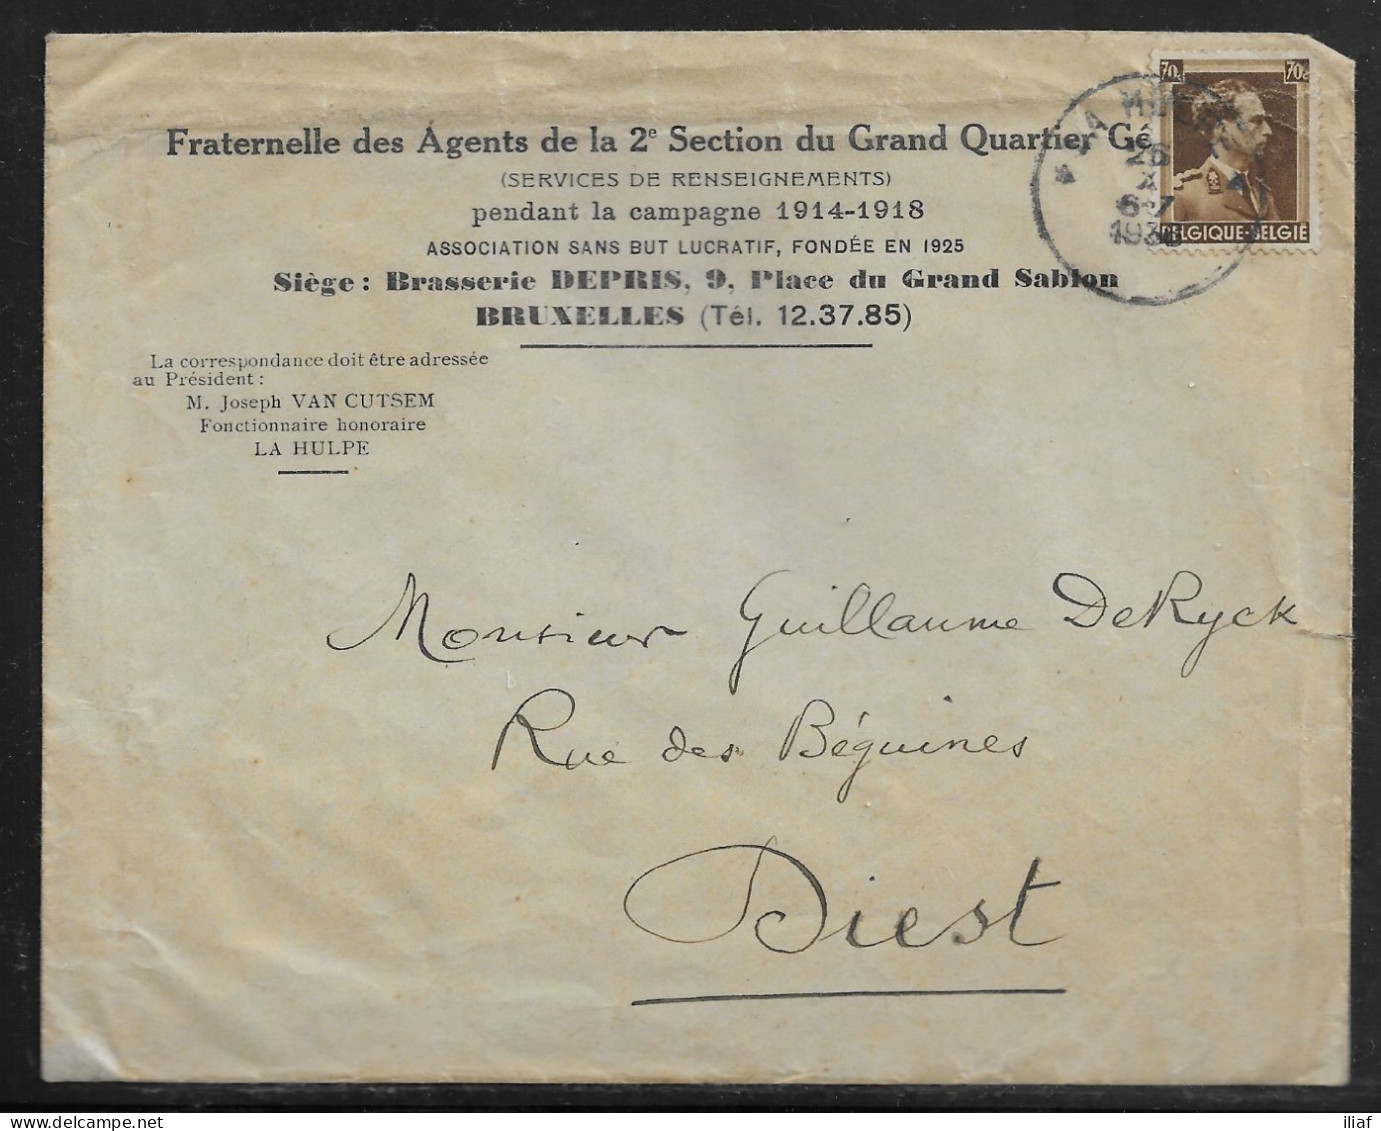 Belgium. Stamp Sc. 283 On Commercial Letter, Sent From La Hulpe On 25.10.1936 For Diest Belgium - 1936-1957 Open Kraag